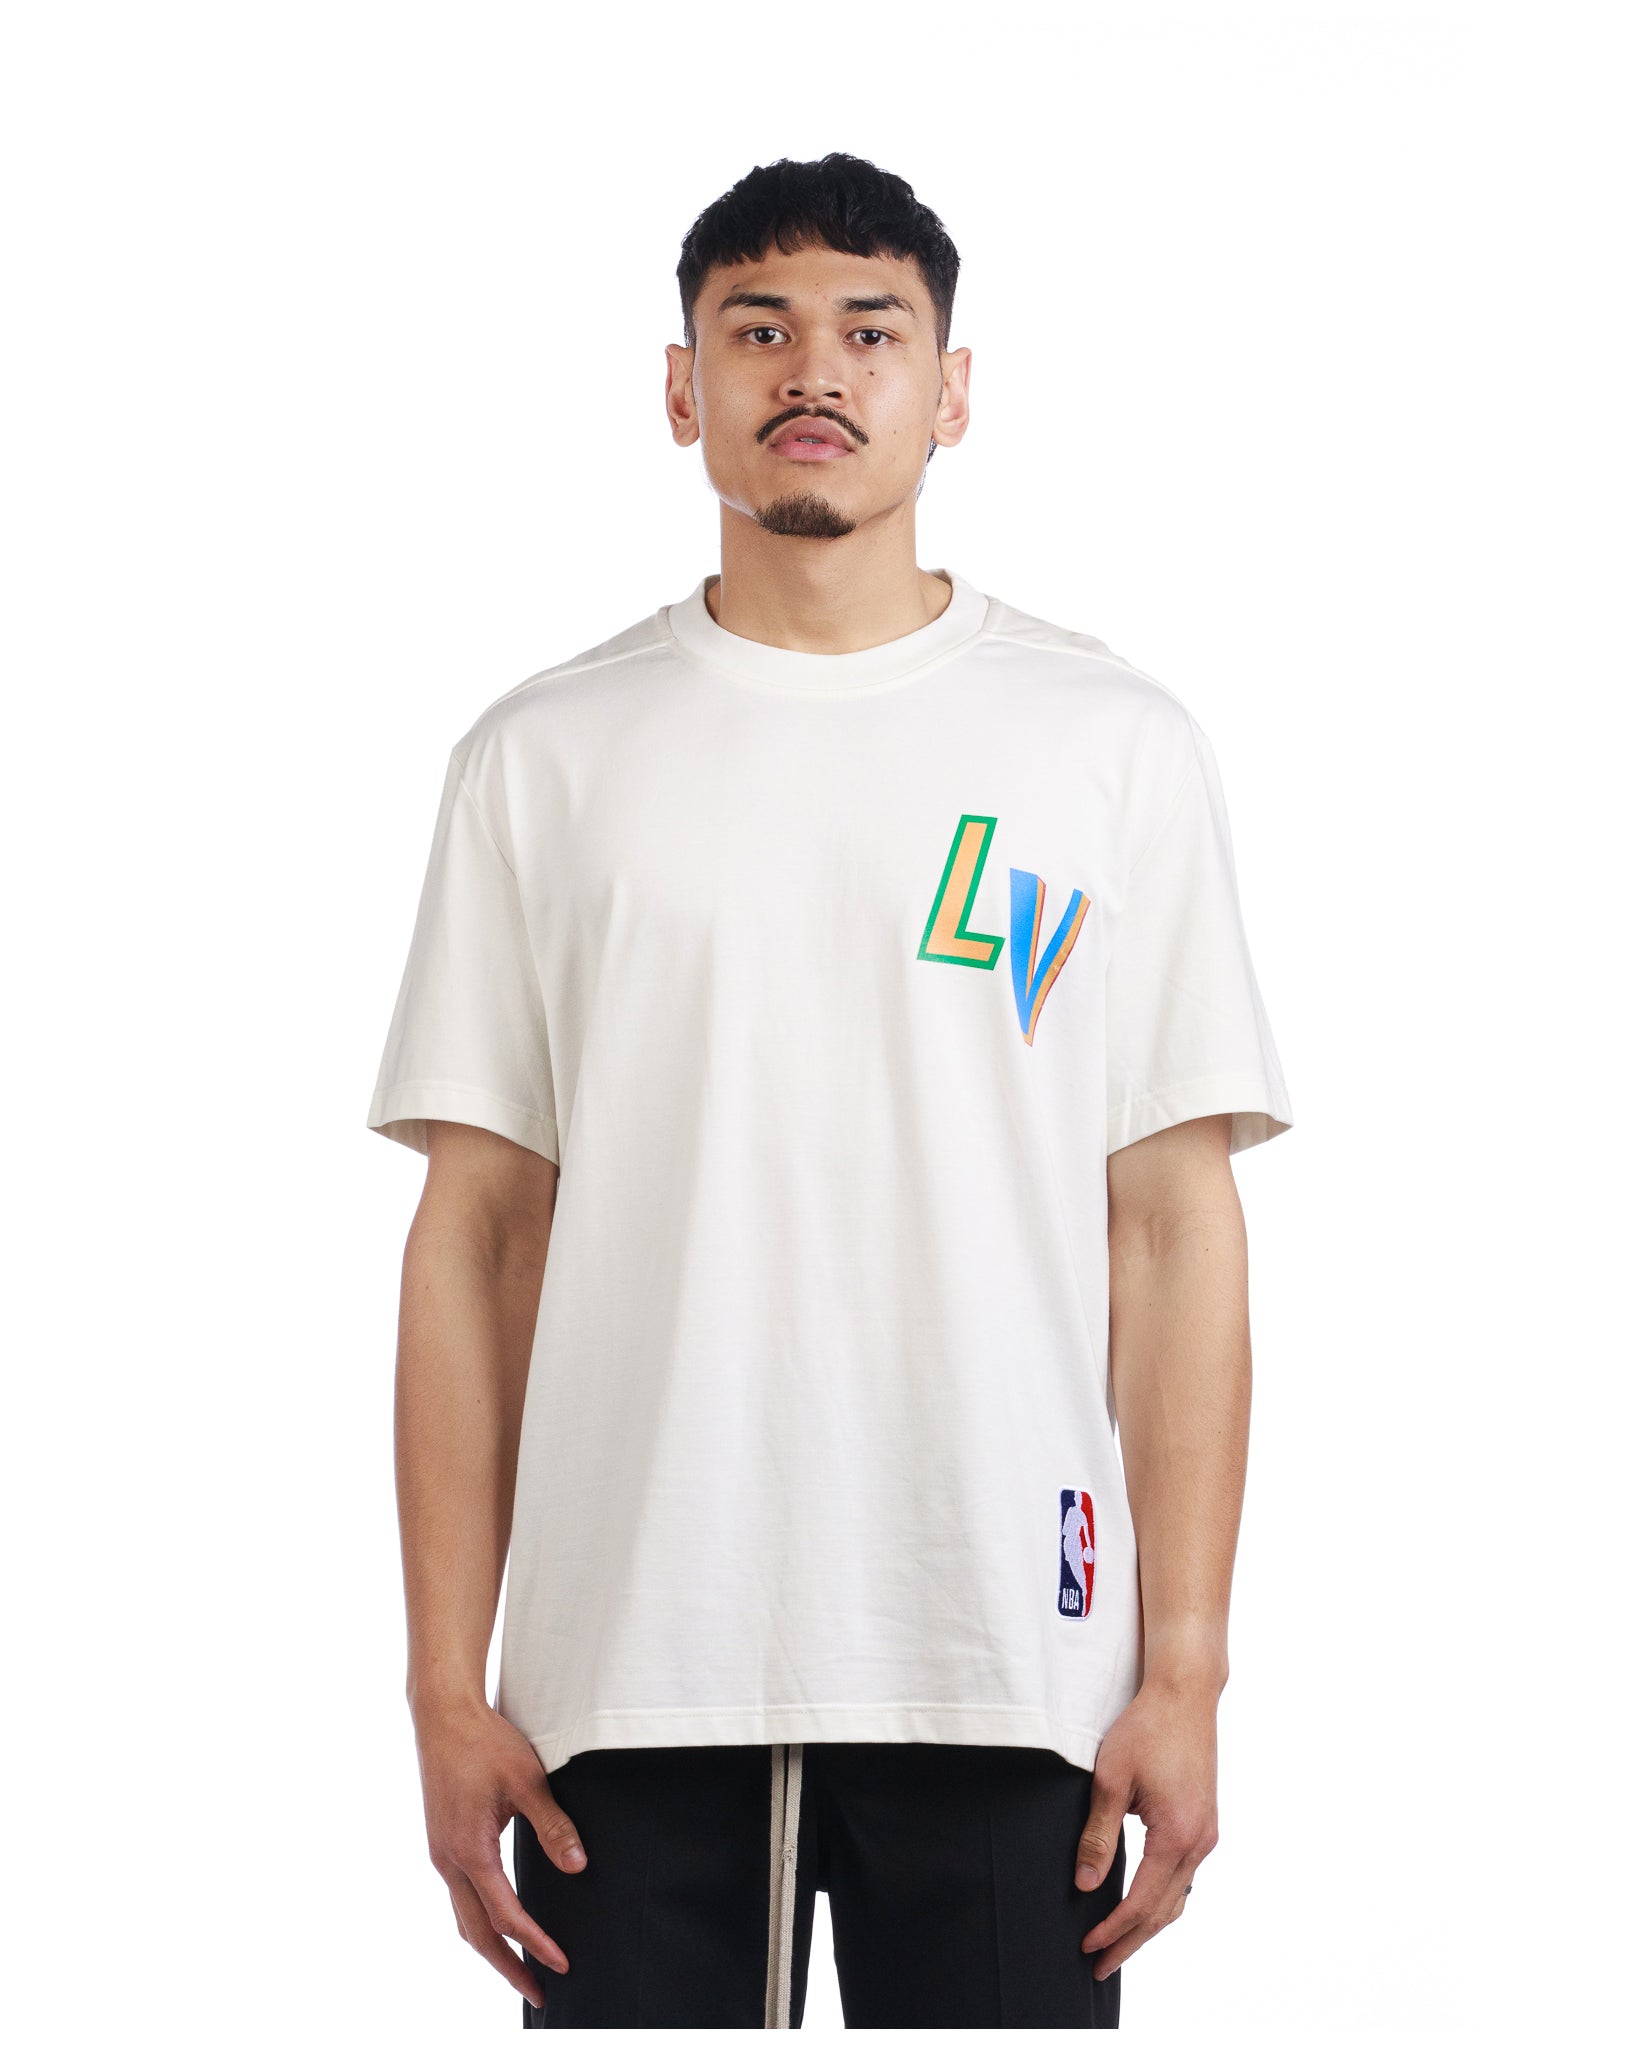 Louis Vuitton x NBA Basketball T-Shirt 'White': Luxurious